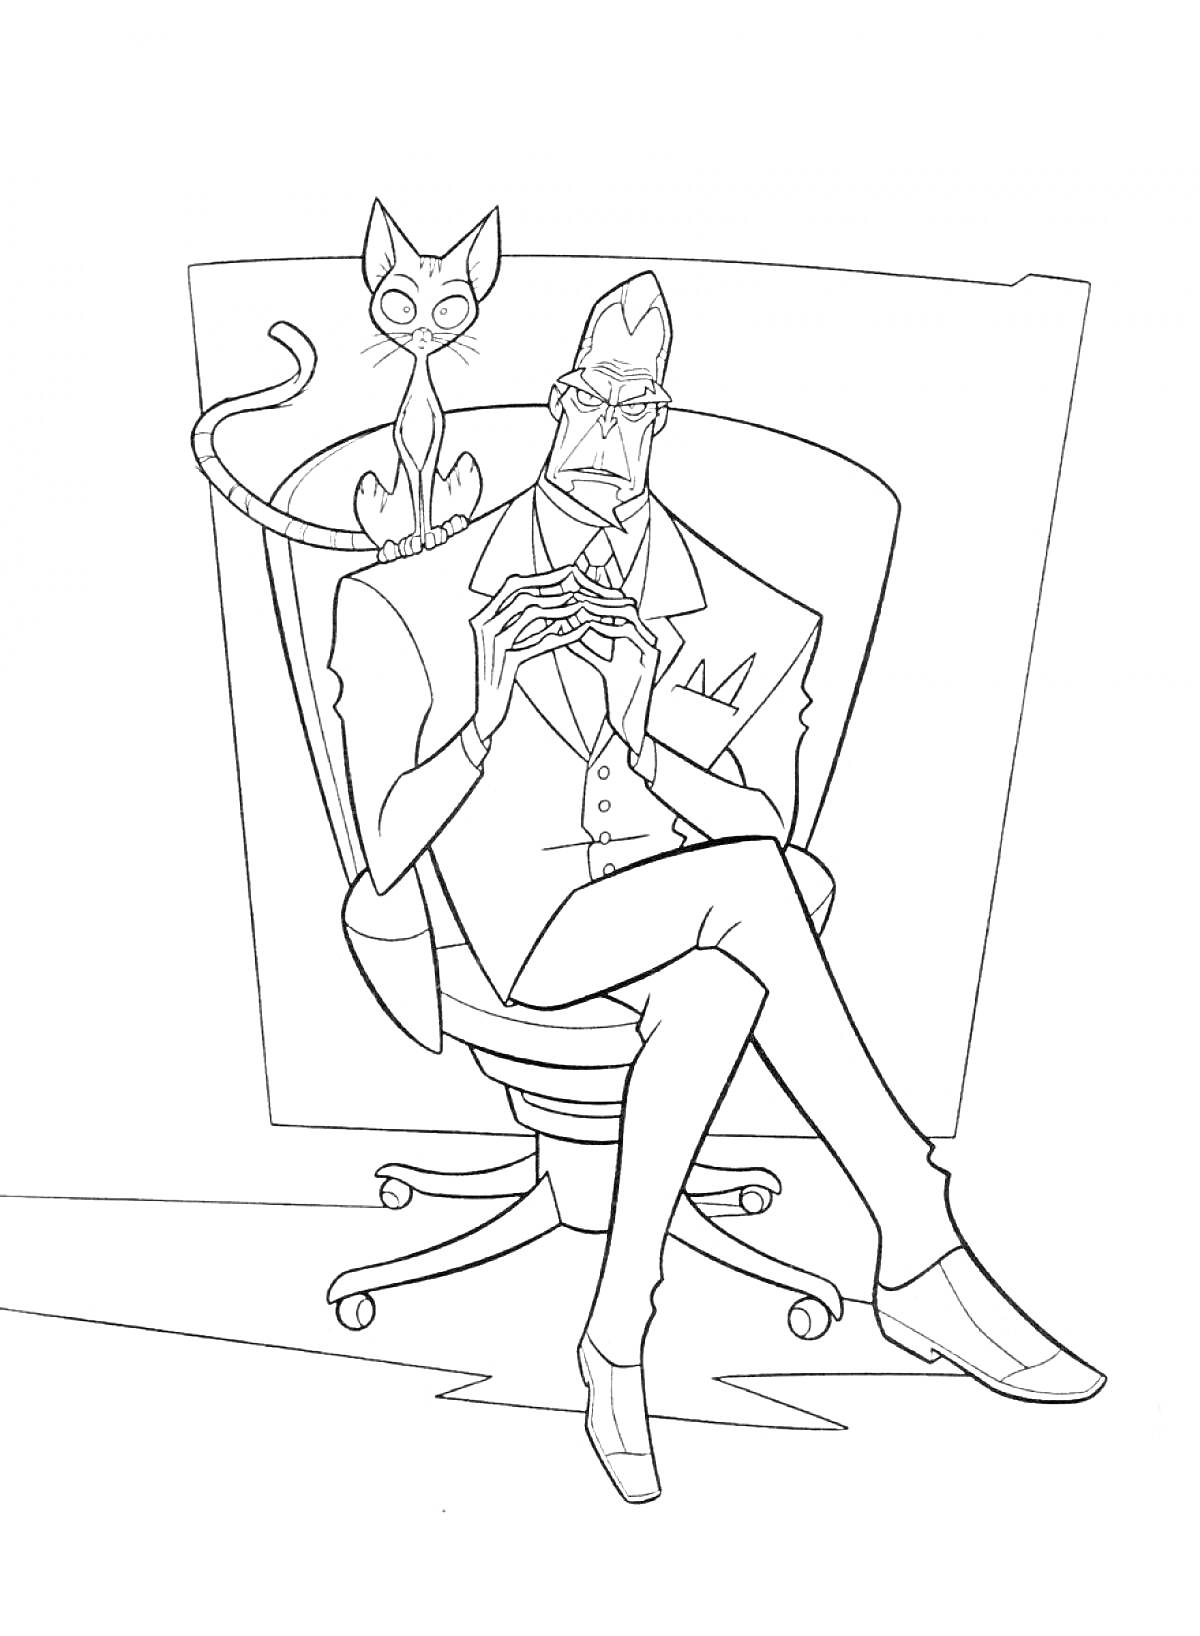 Раскраска Мужчина в строгом костюме и кот на спинке кресла